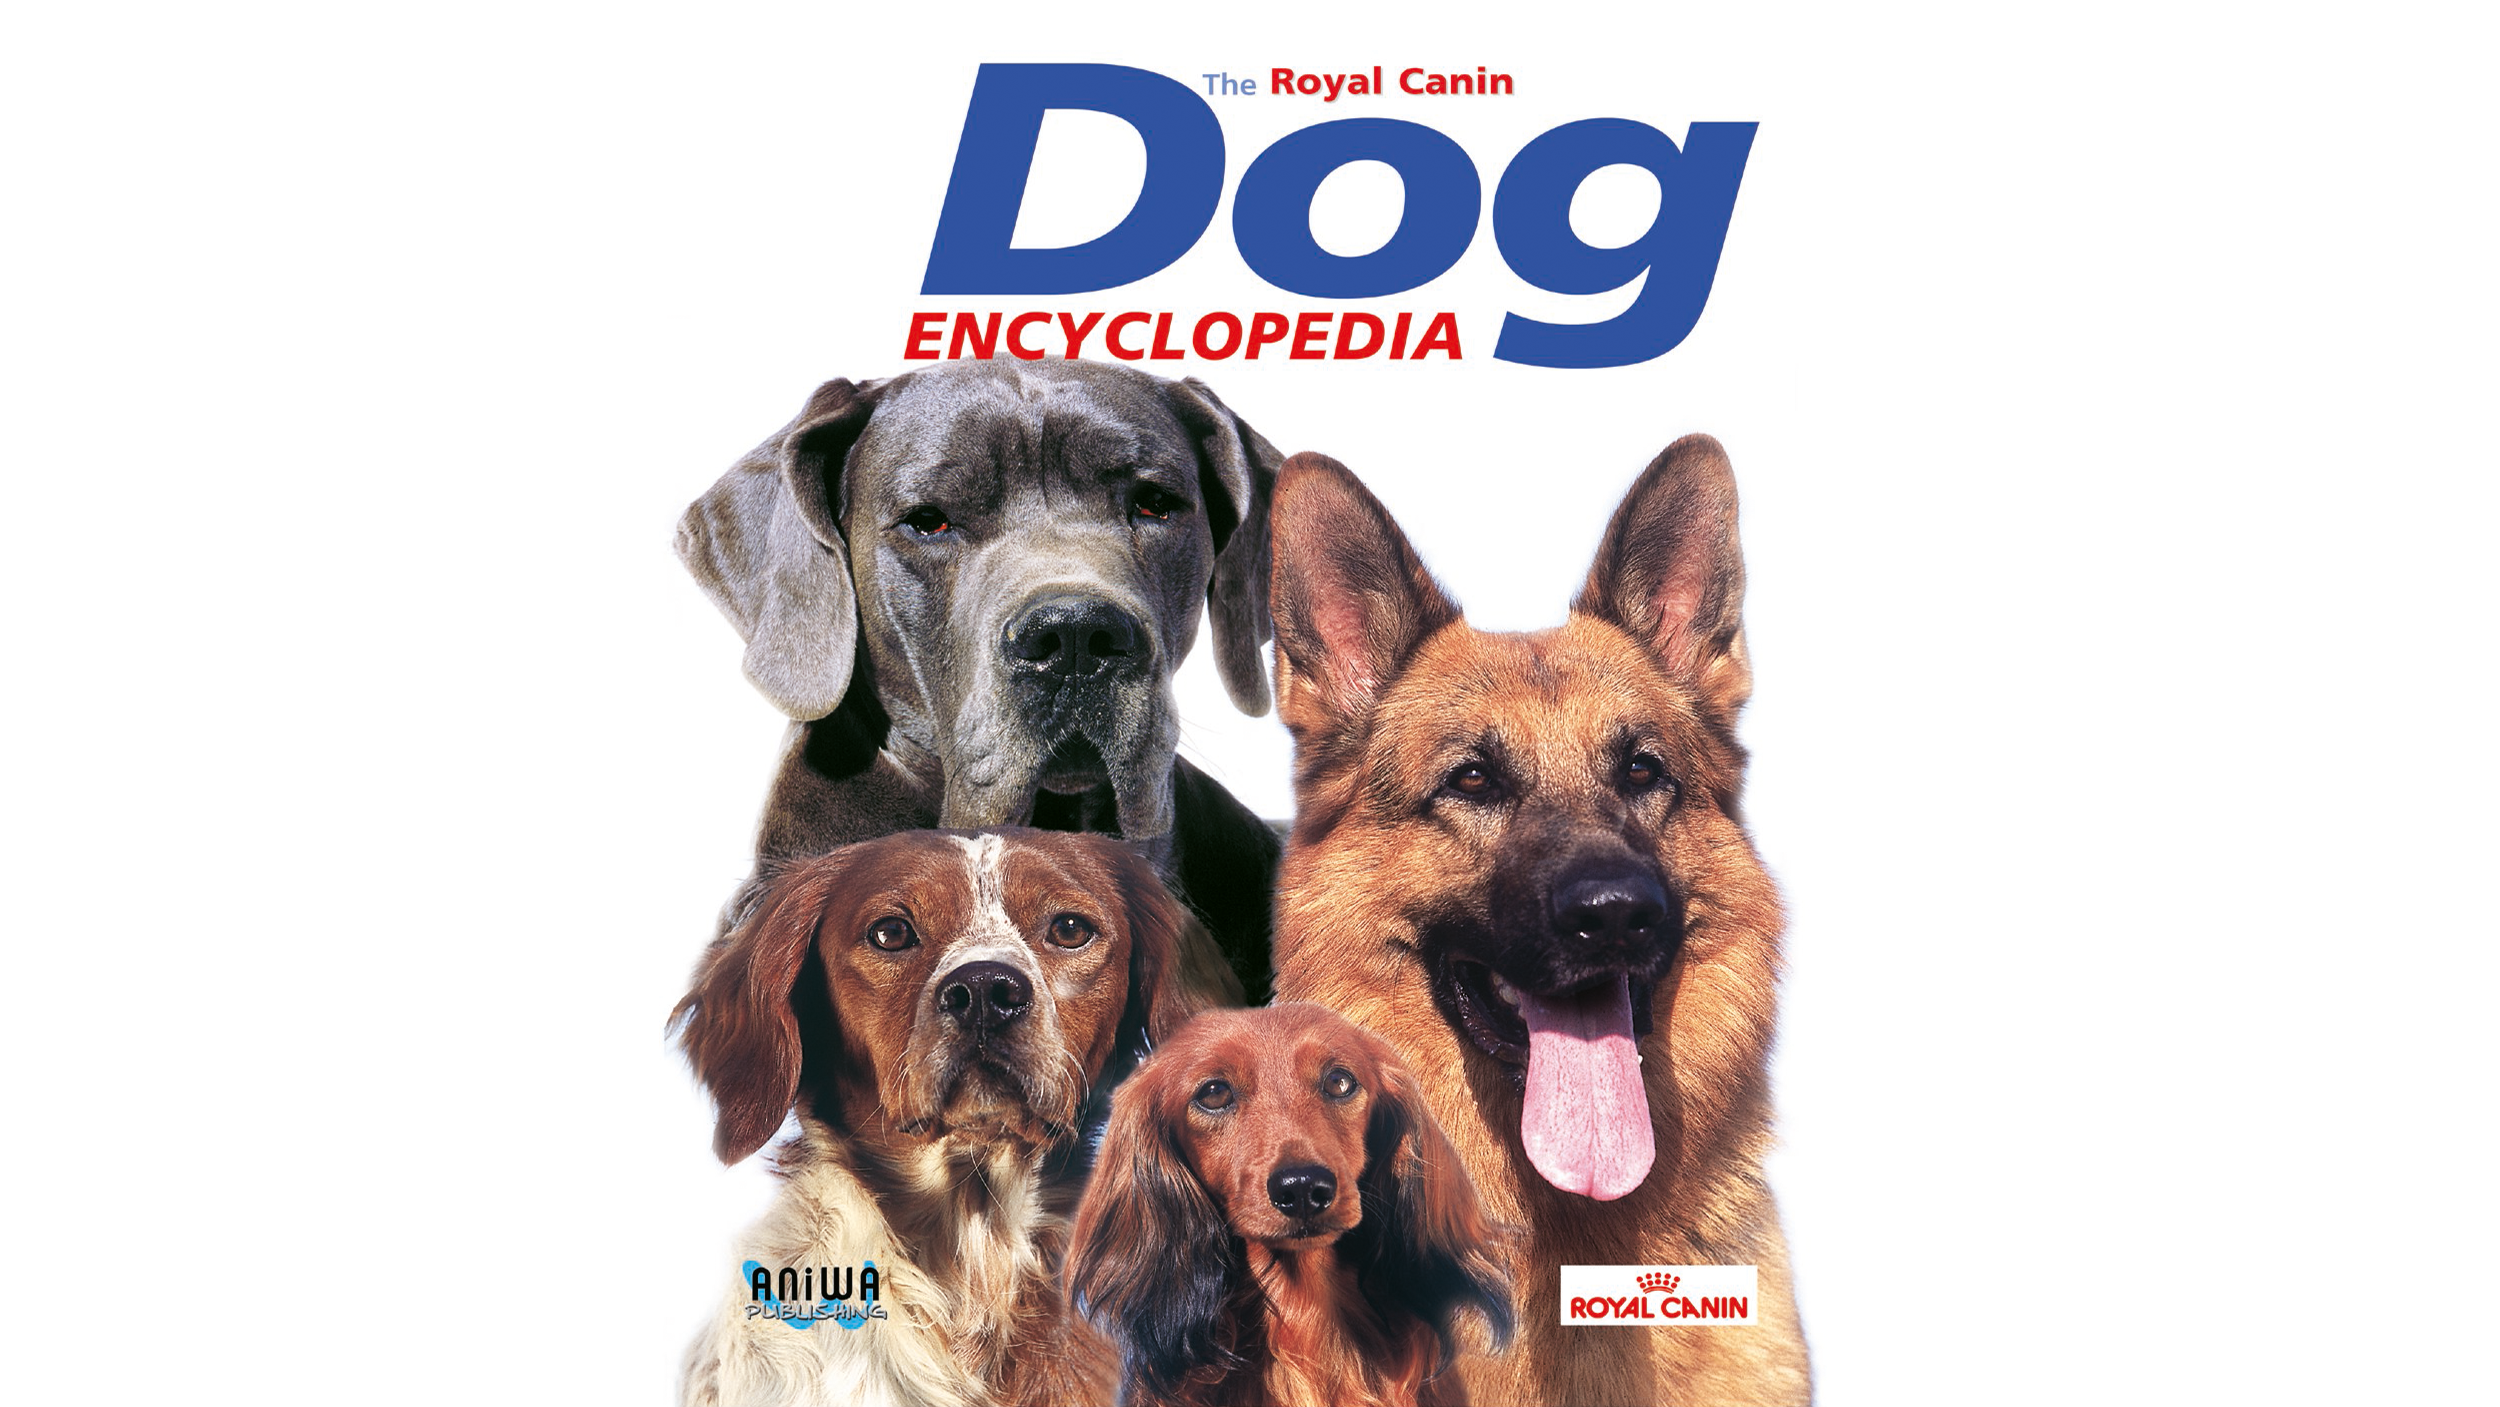 Enciclopedia de perros Royal Canin